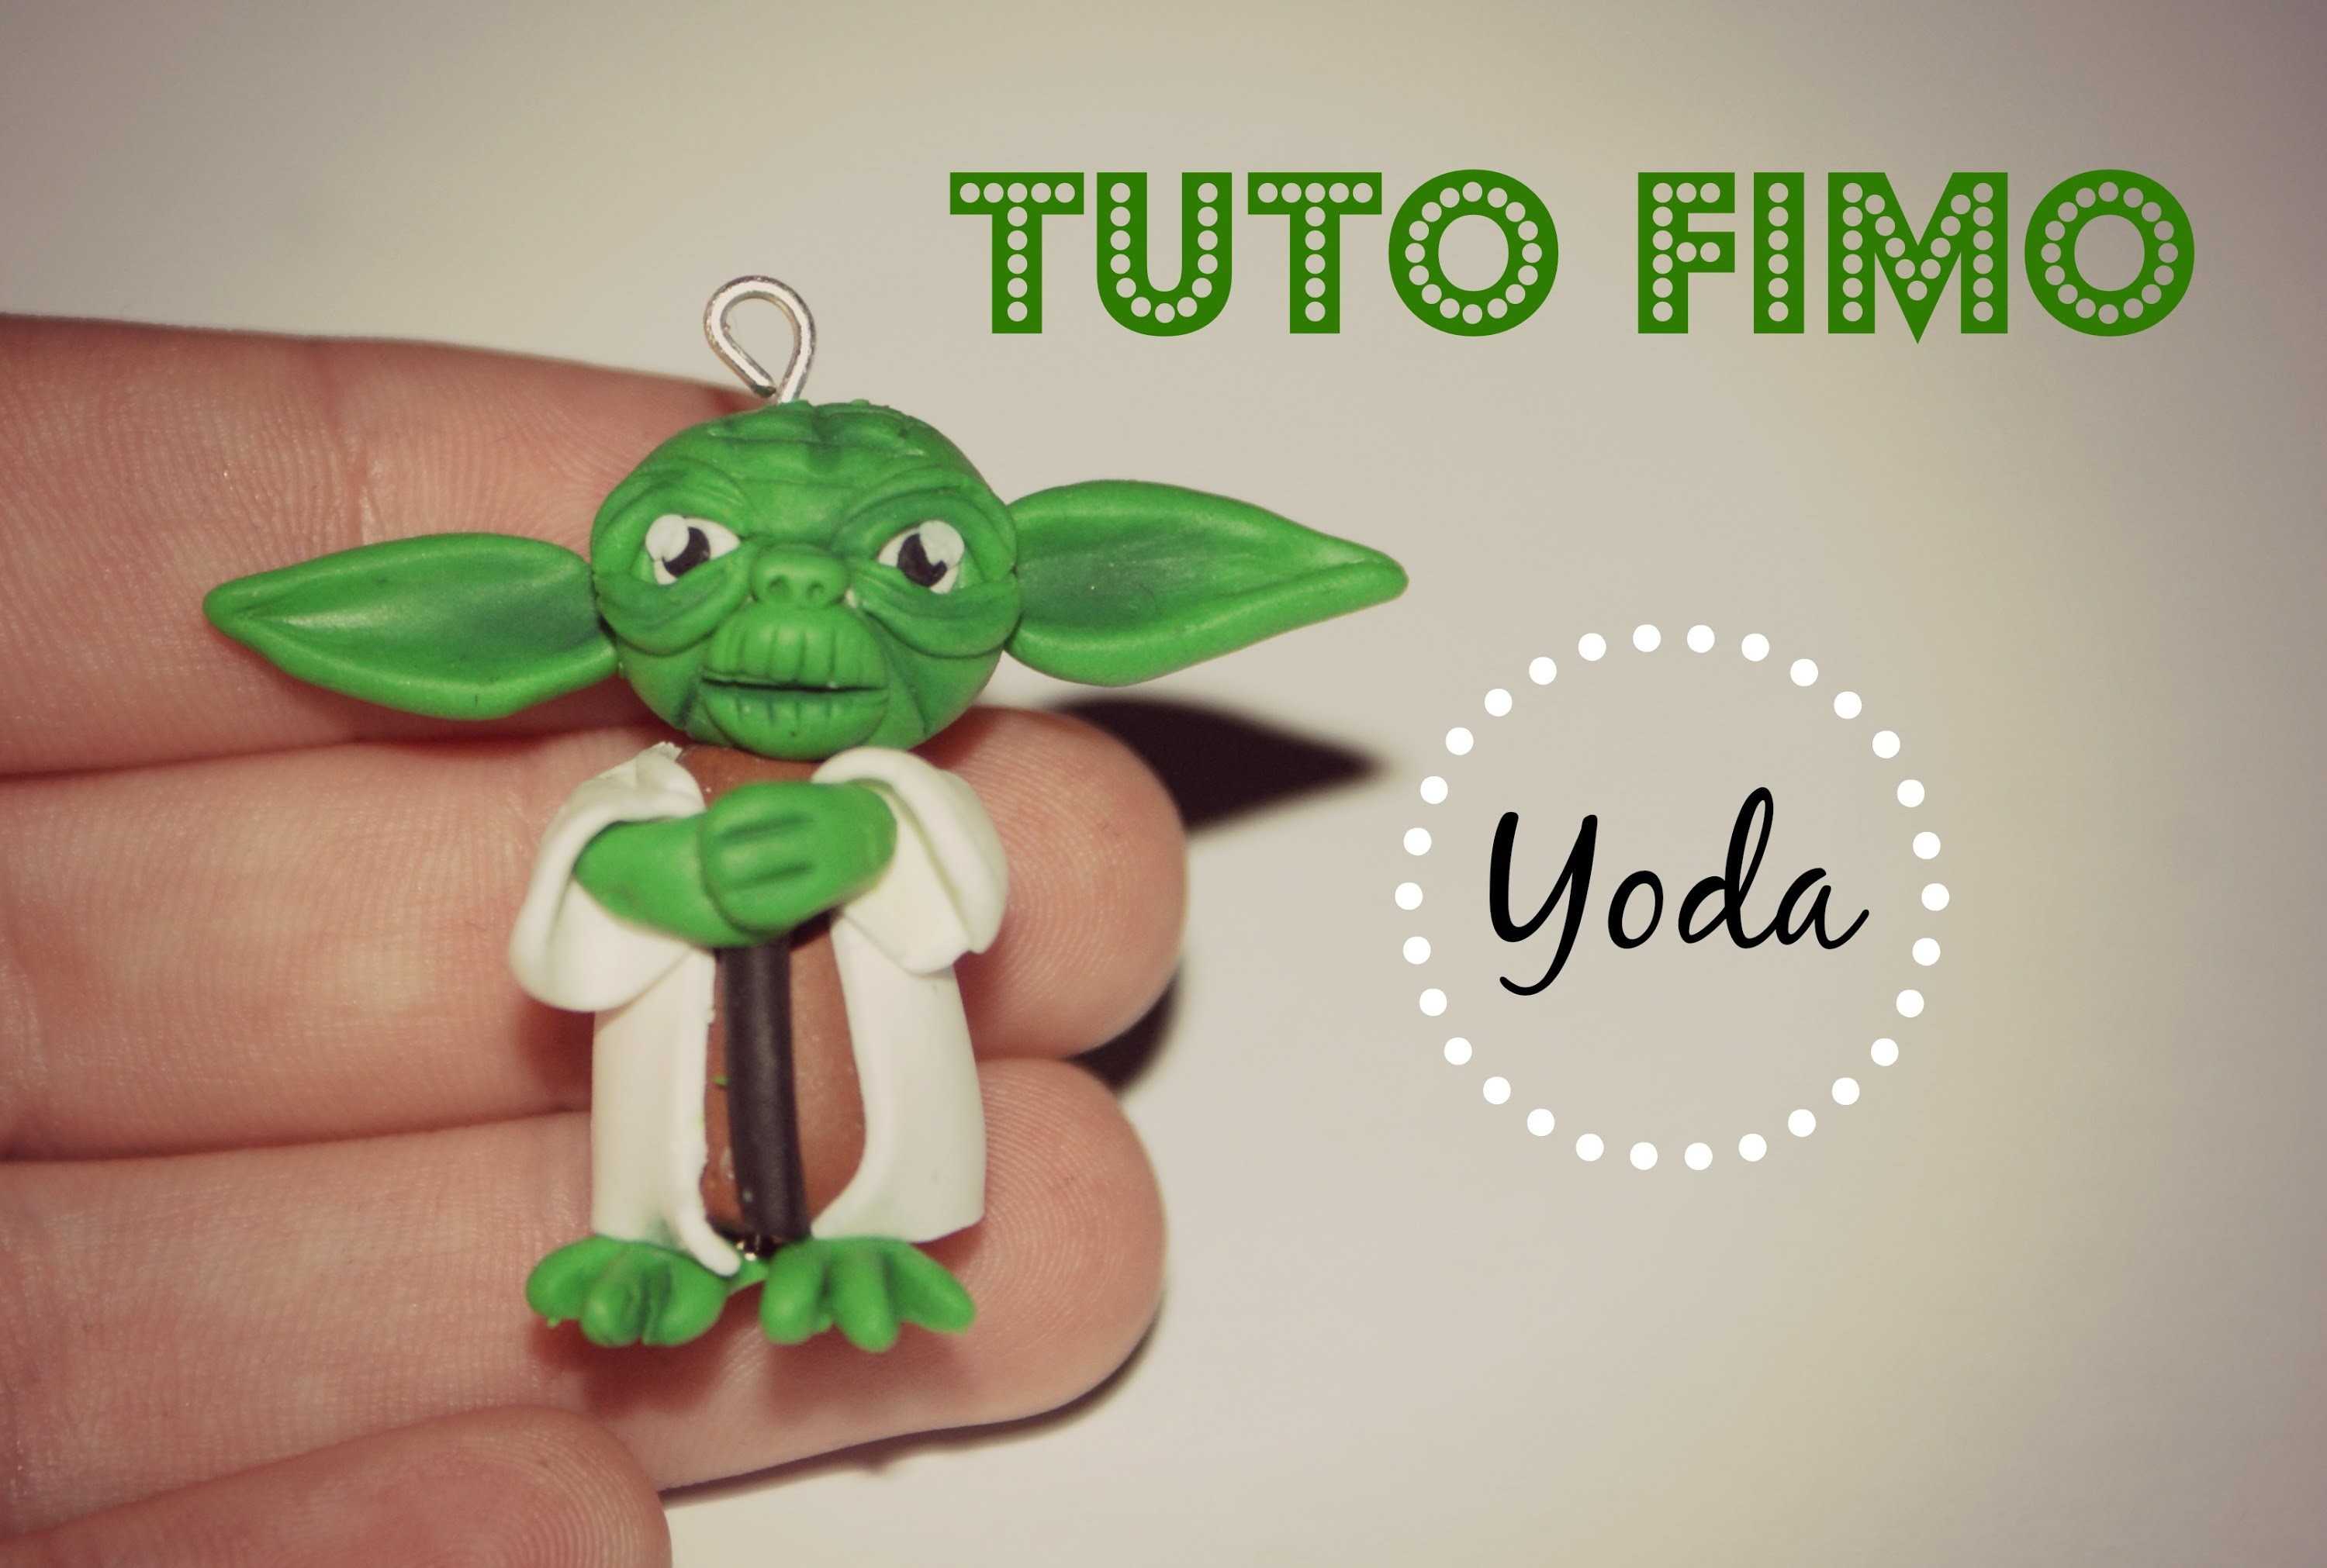 TUTO FIMO → Yoda. Yoda Polymer clay Tutorial